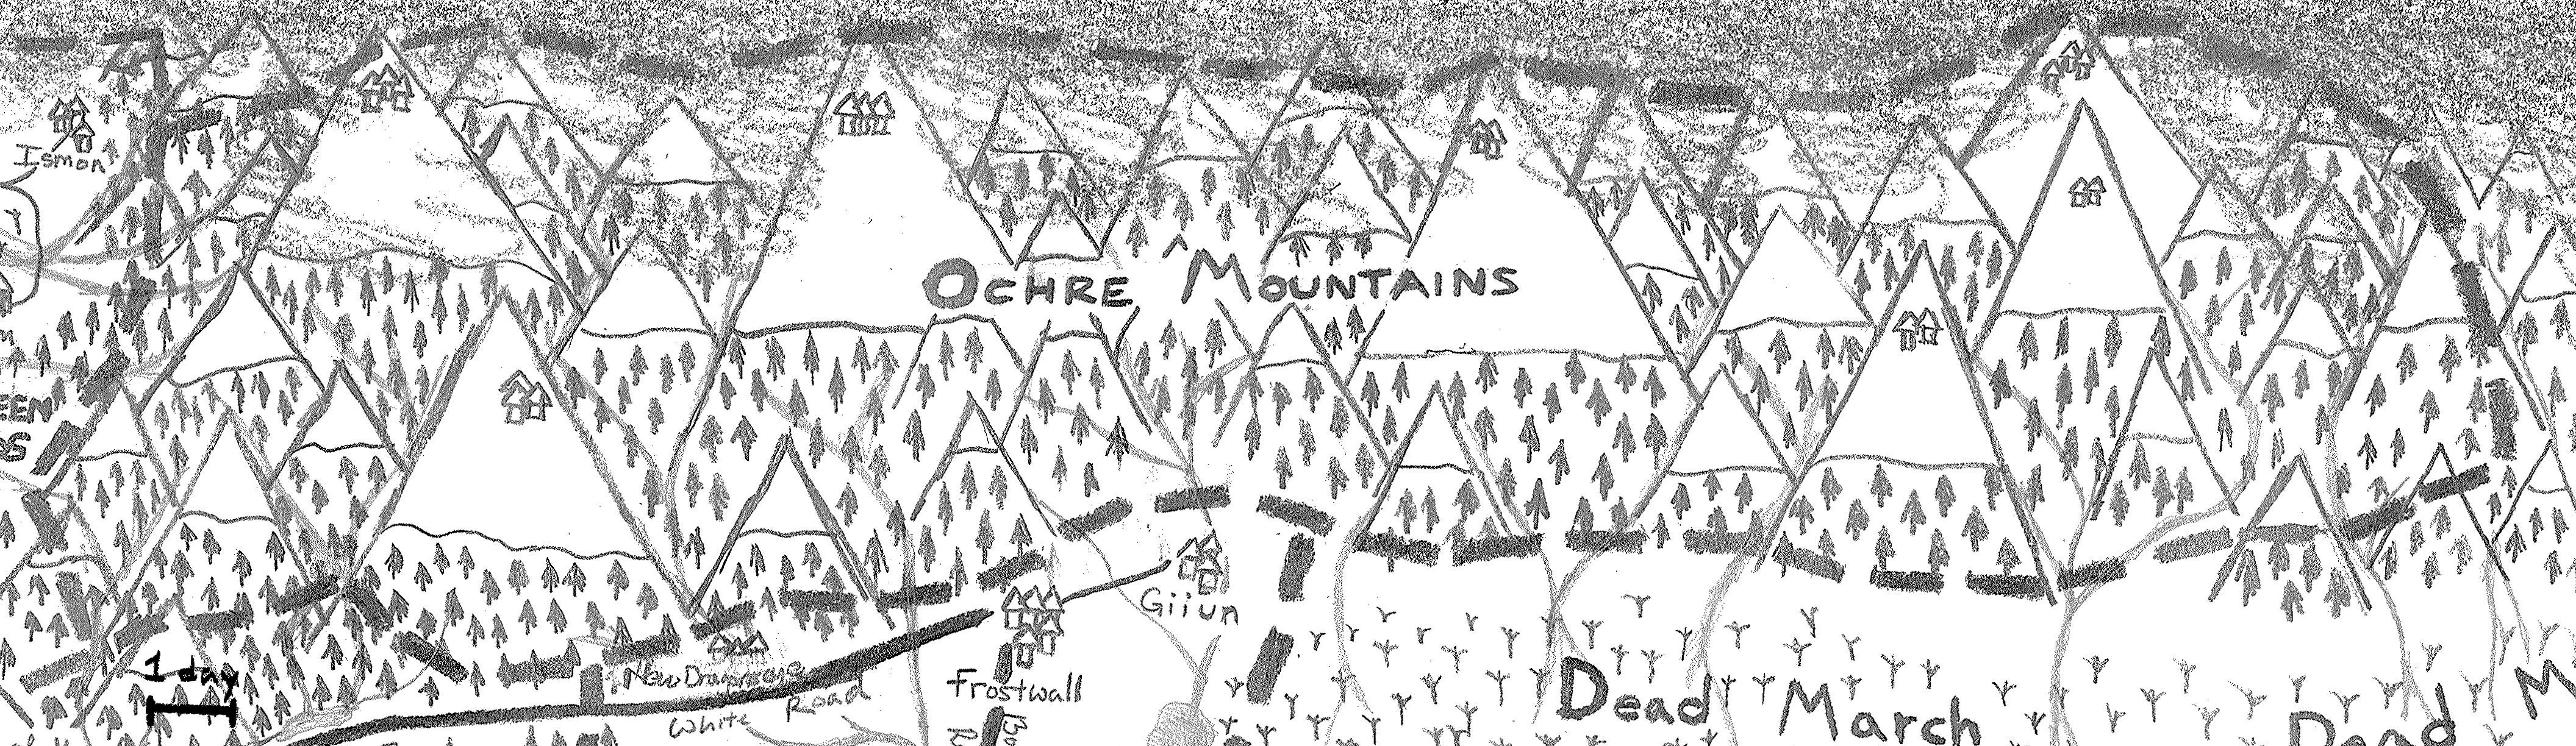 4e Campaign Setting Patronage Ochre Mountains.jpg